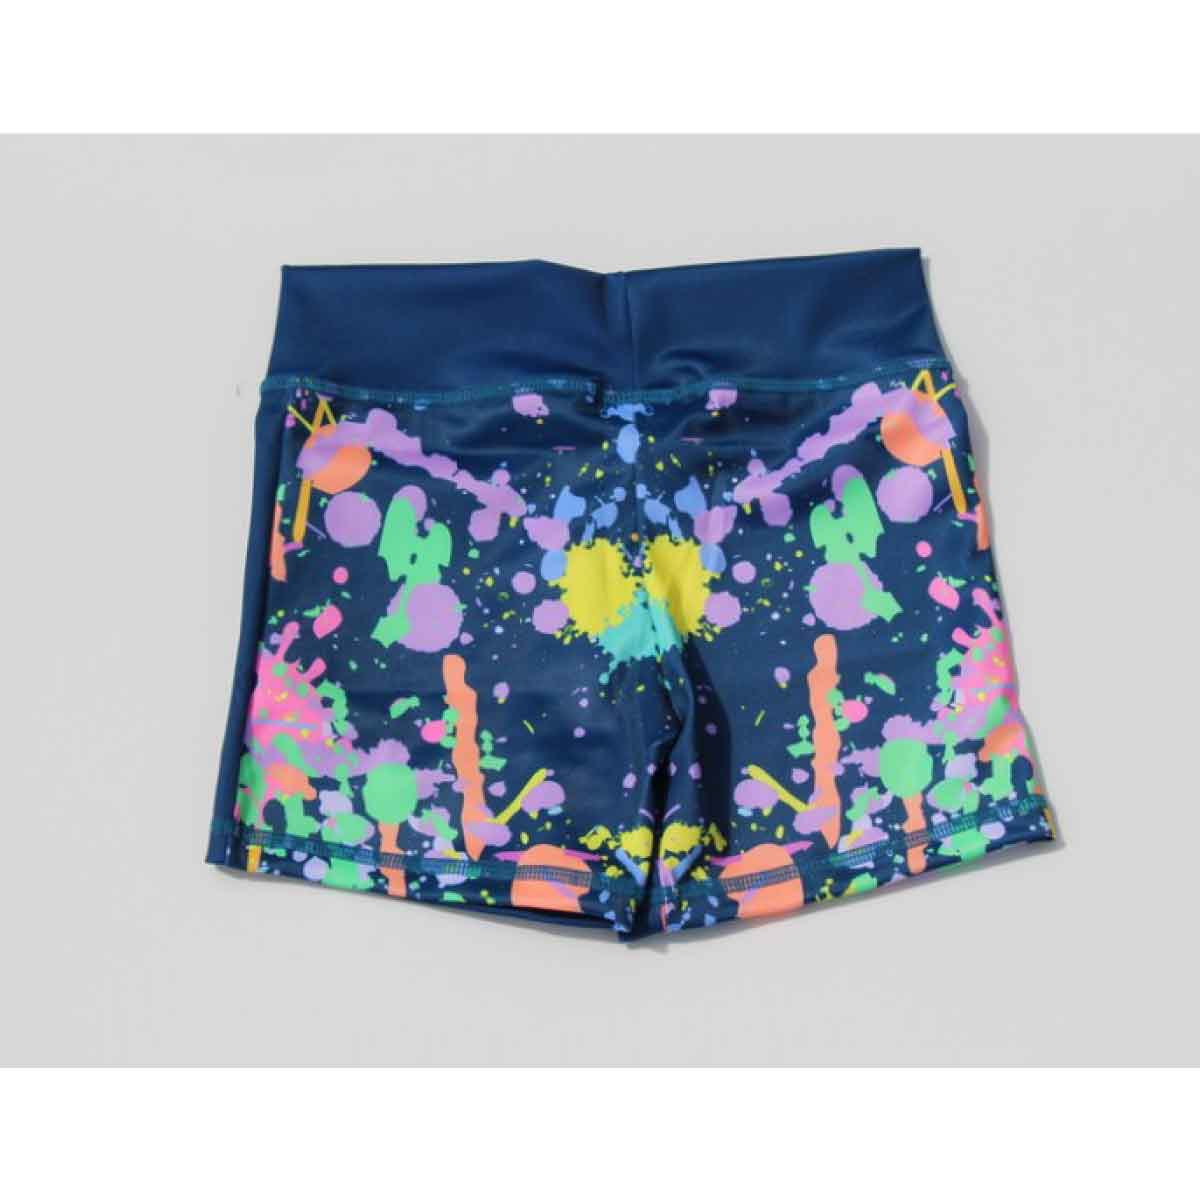 Splash paint girls' shorts